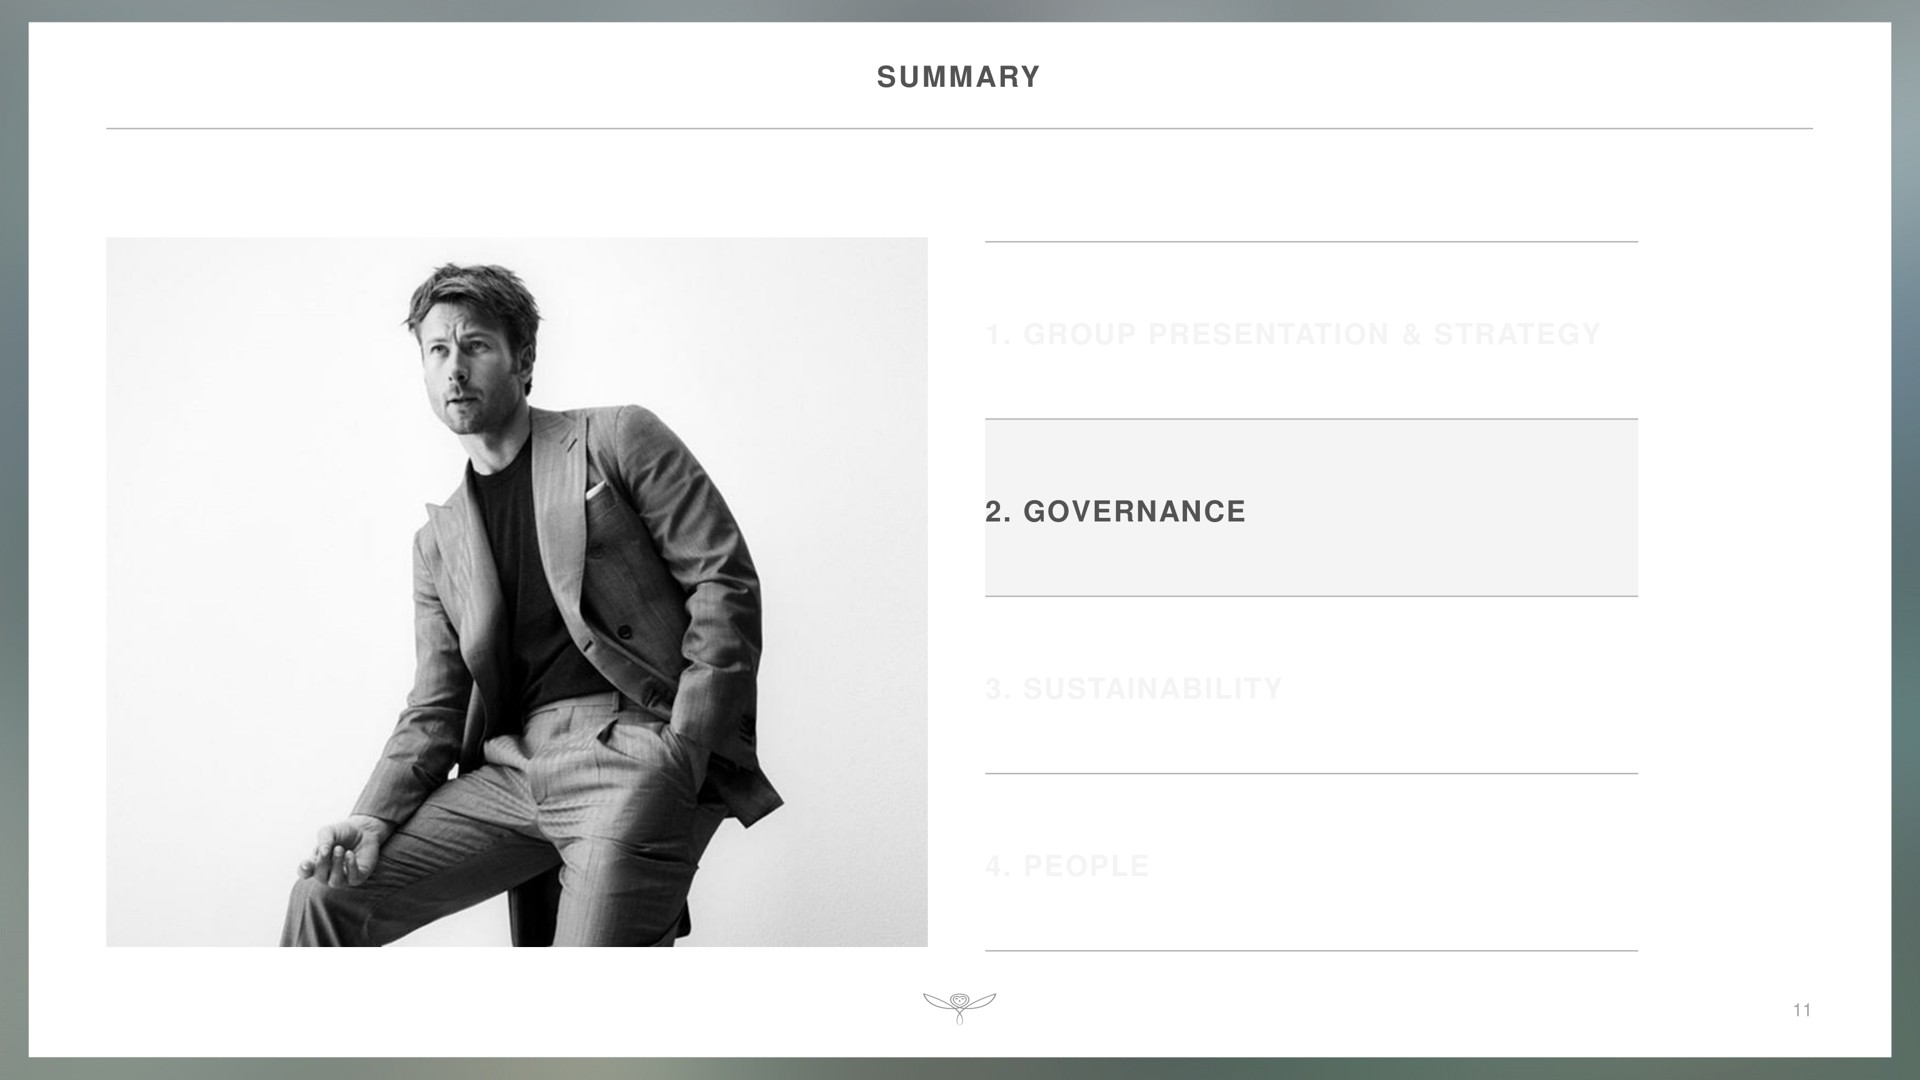 summary group presentation strategy governance people | Kering